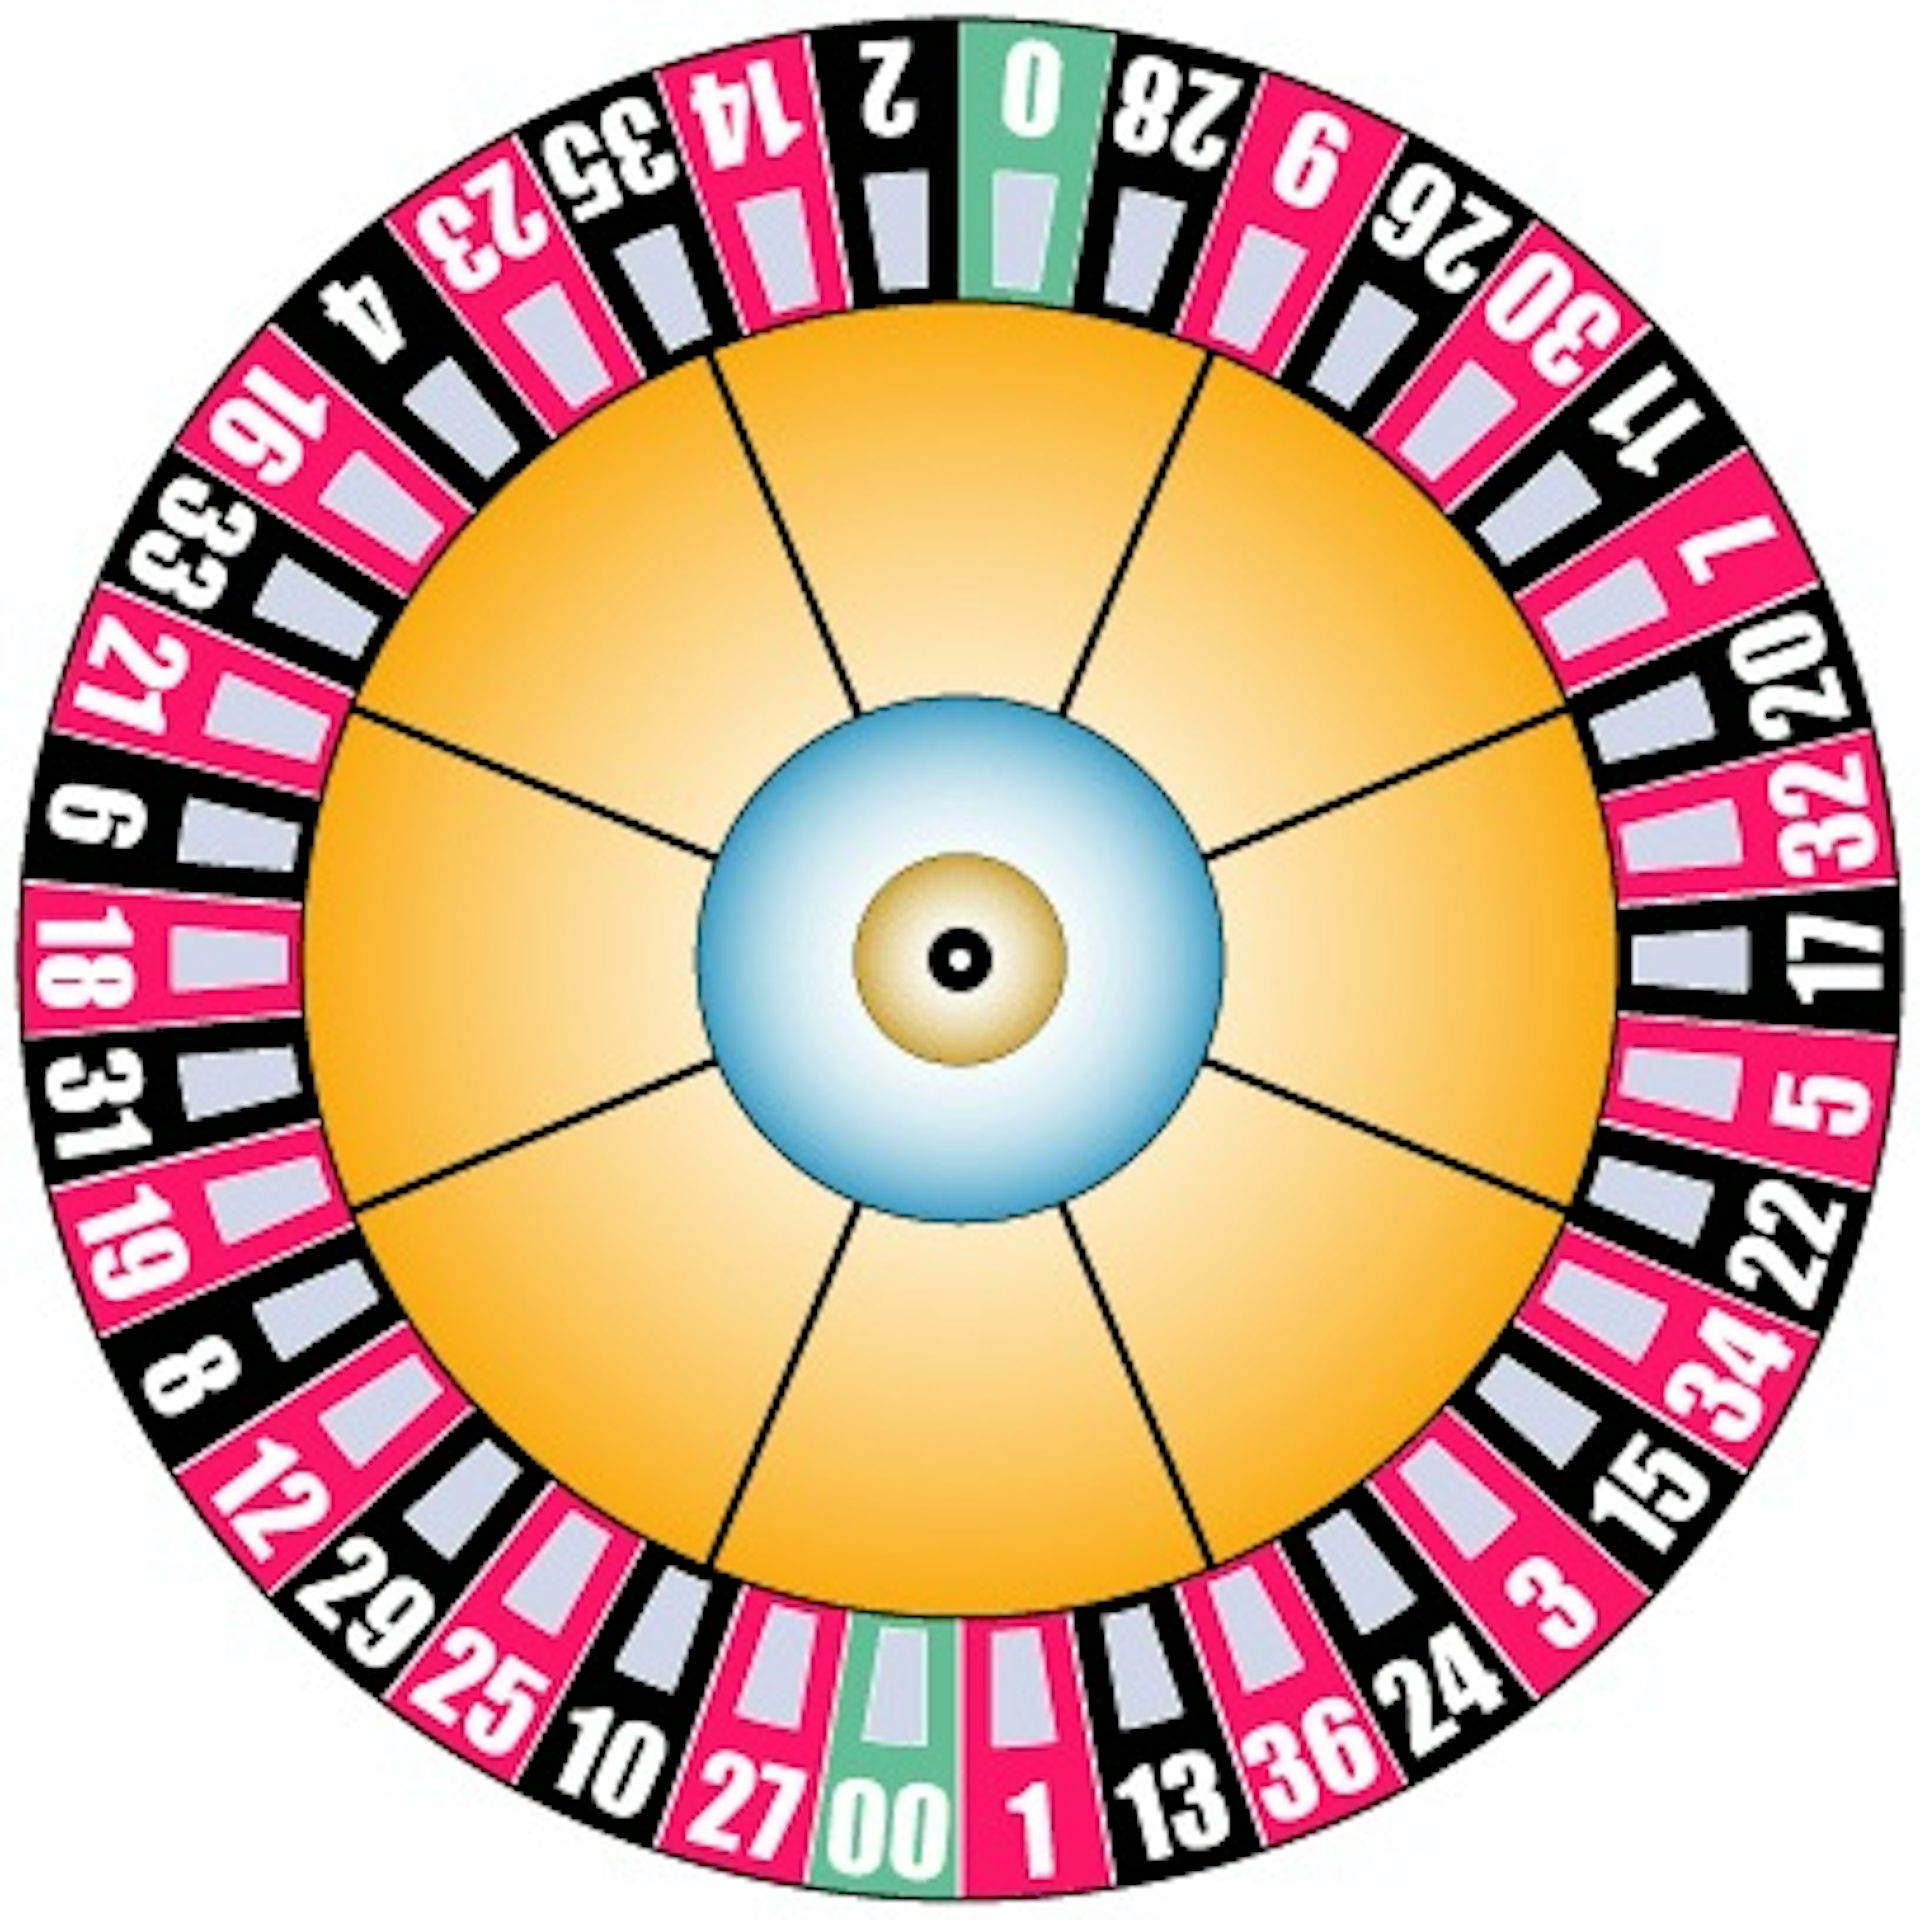 roulette wheel vs table layout